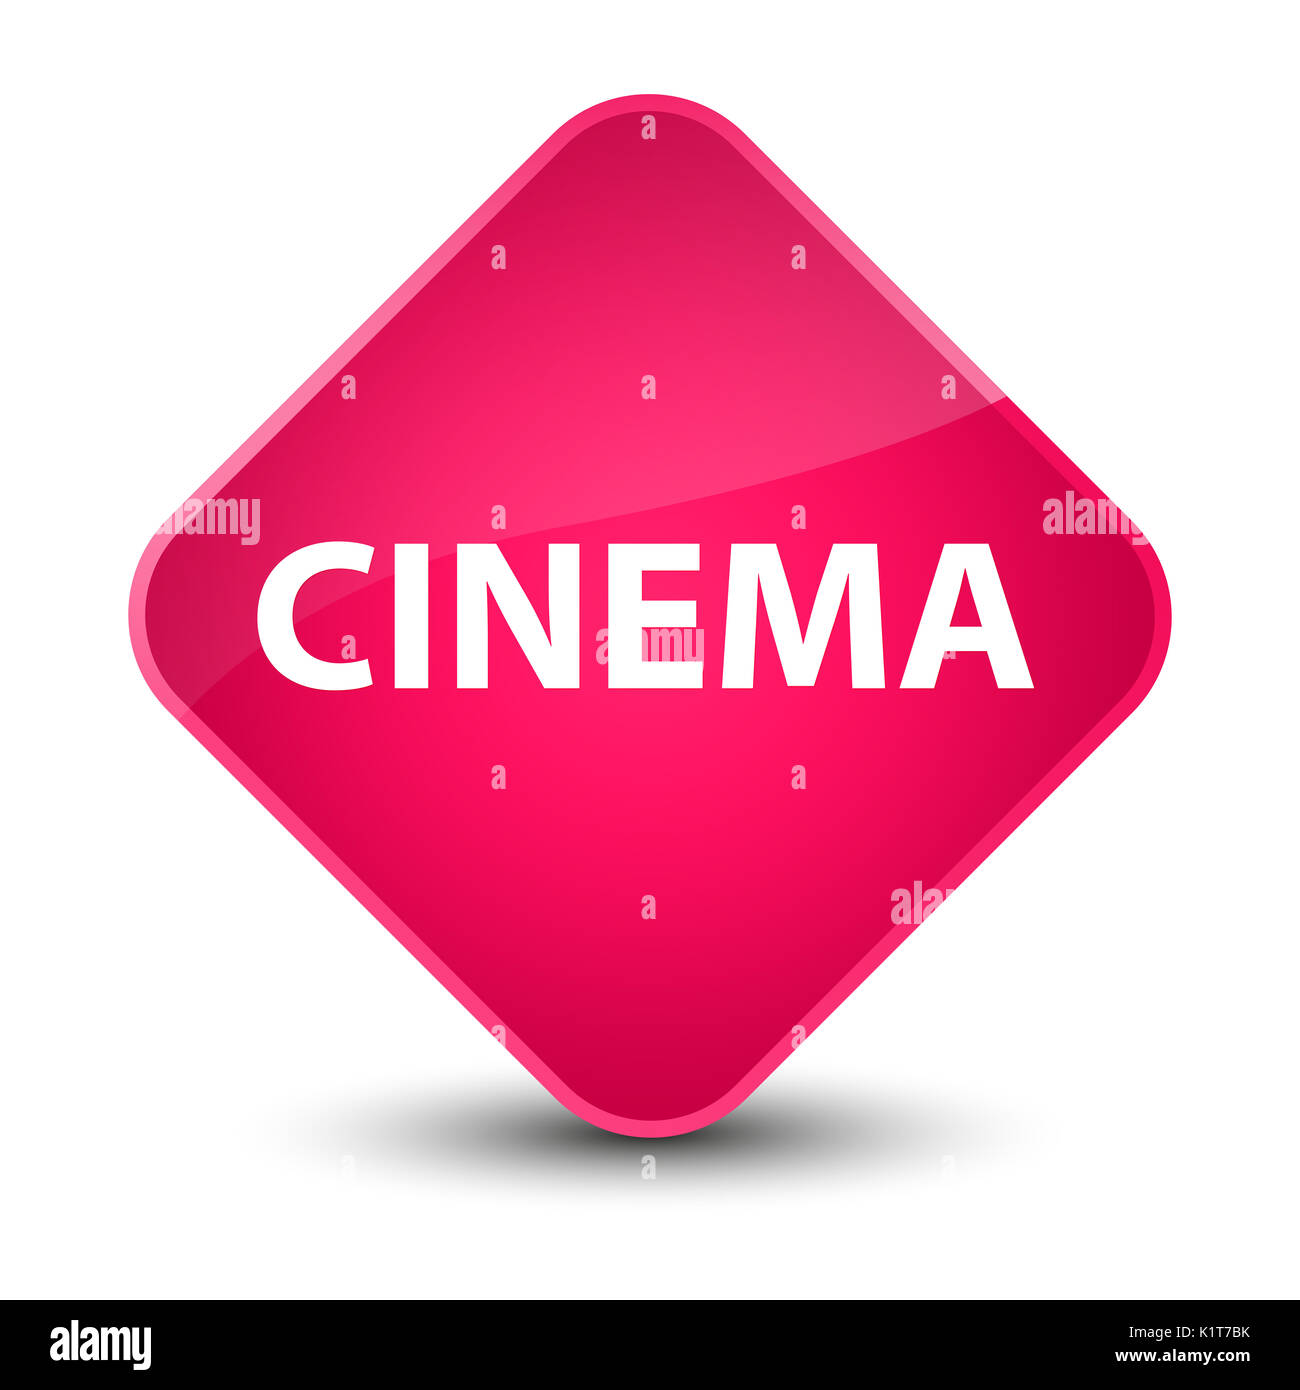 Cinema isolated on elegant pink diamond button abstract illustration Stock Photo